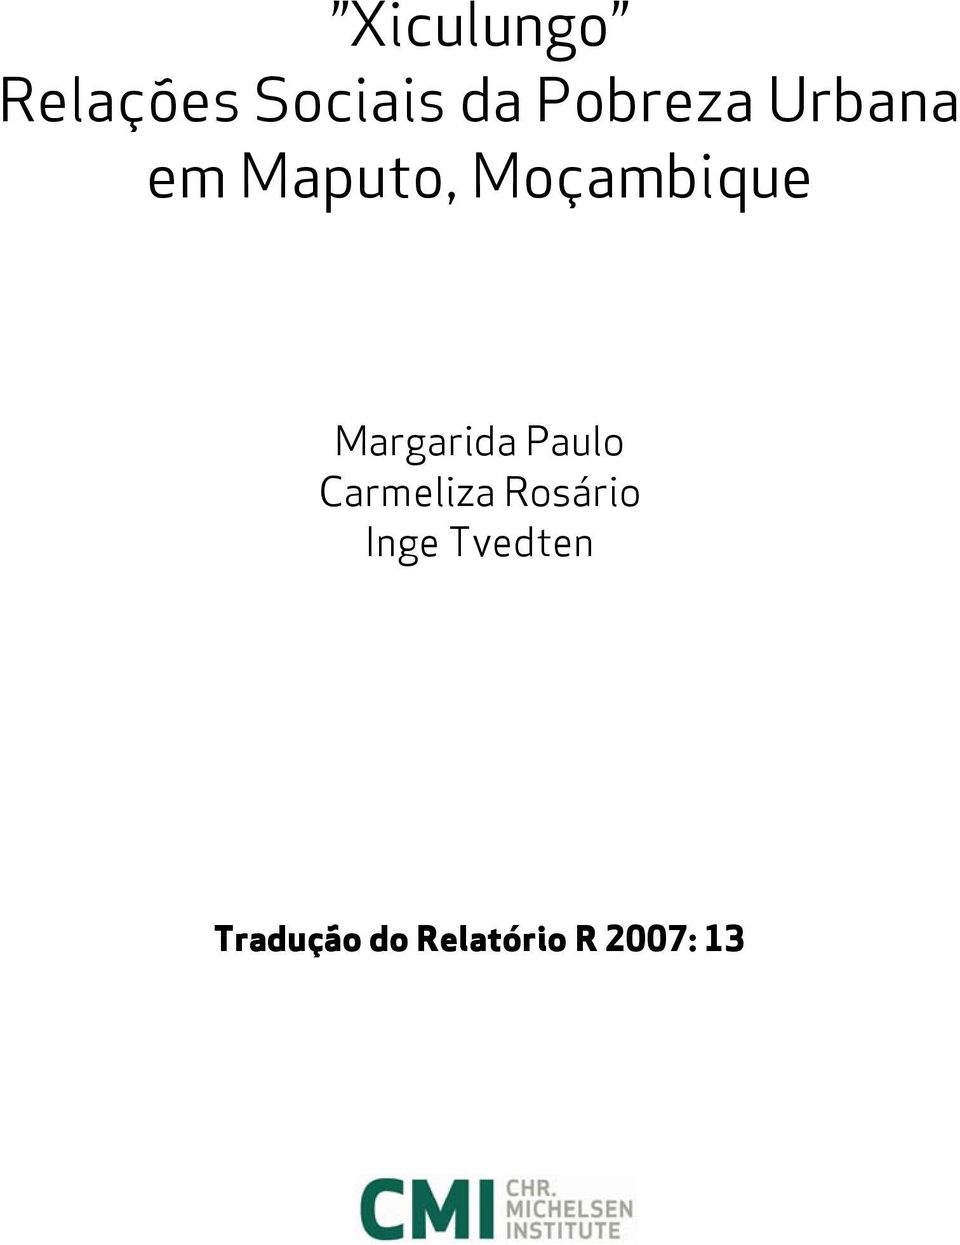 Margarida Paulo Carmeliza Rosário